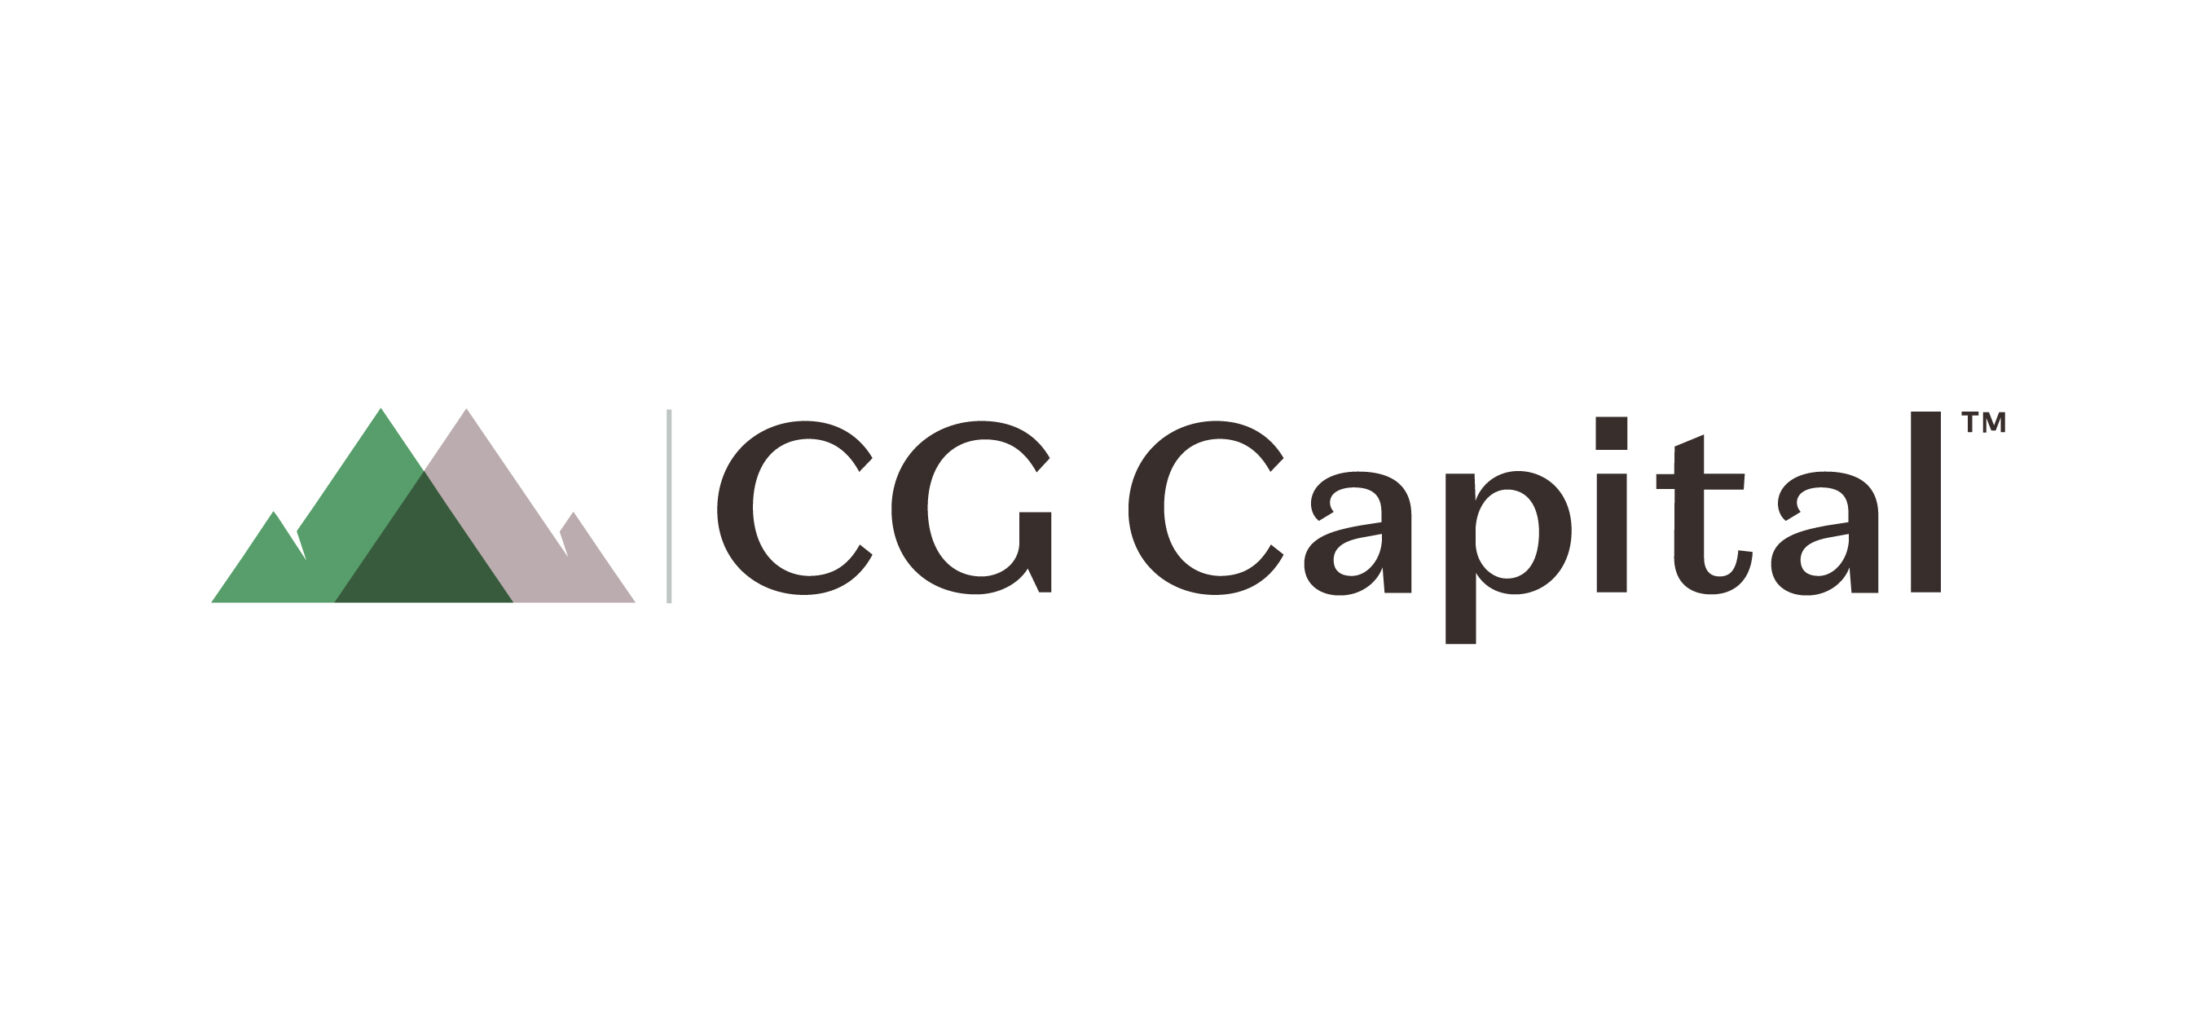 CG Capital Primary logo lockup